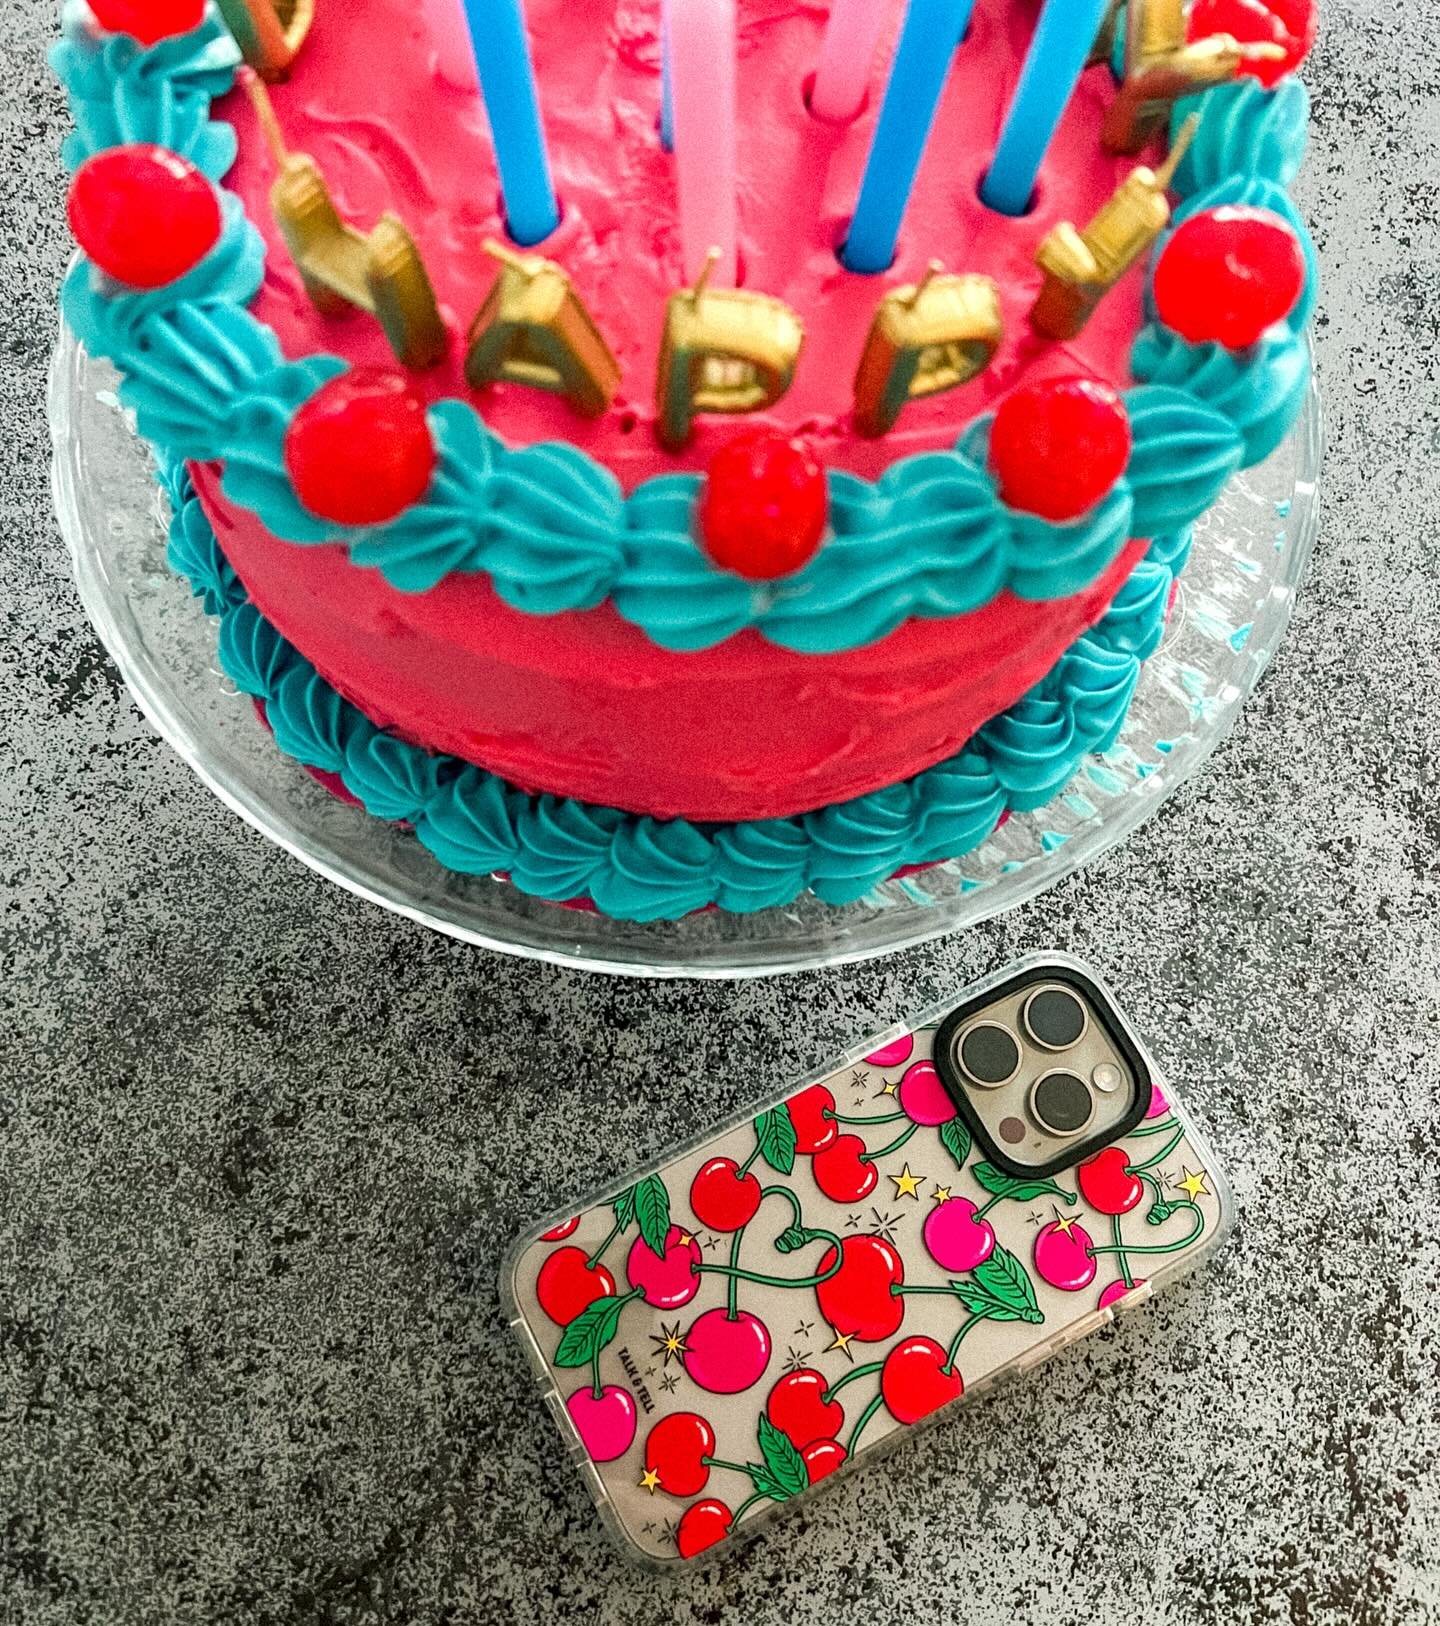 When your case matches your cake 🍒 

#phonecase #iphonecase #cherry #cherrybomb #cakedecorating #cakeart #phonecasedesign #phonecaseshop #cherries